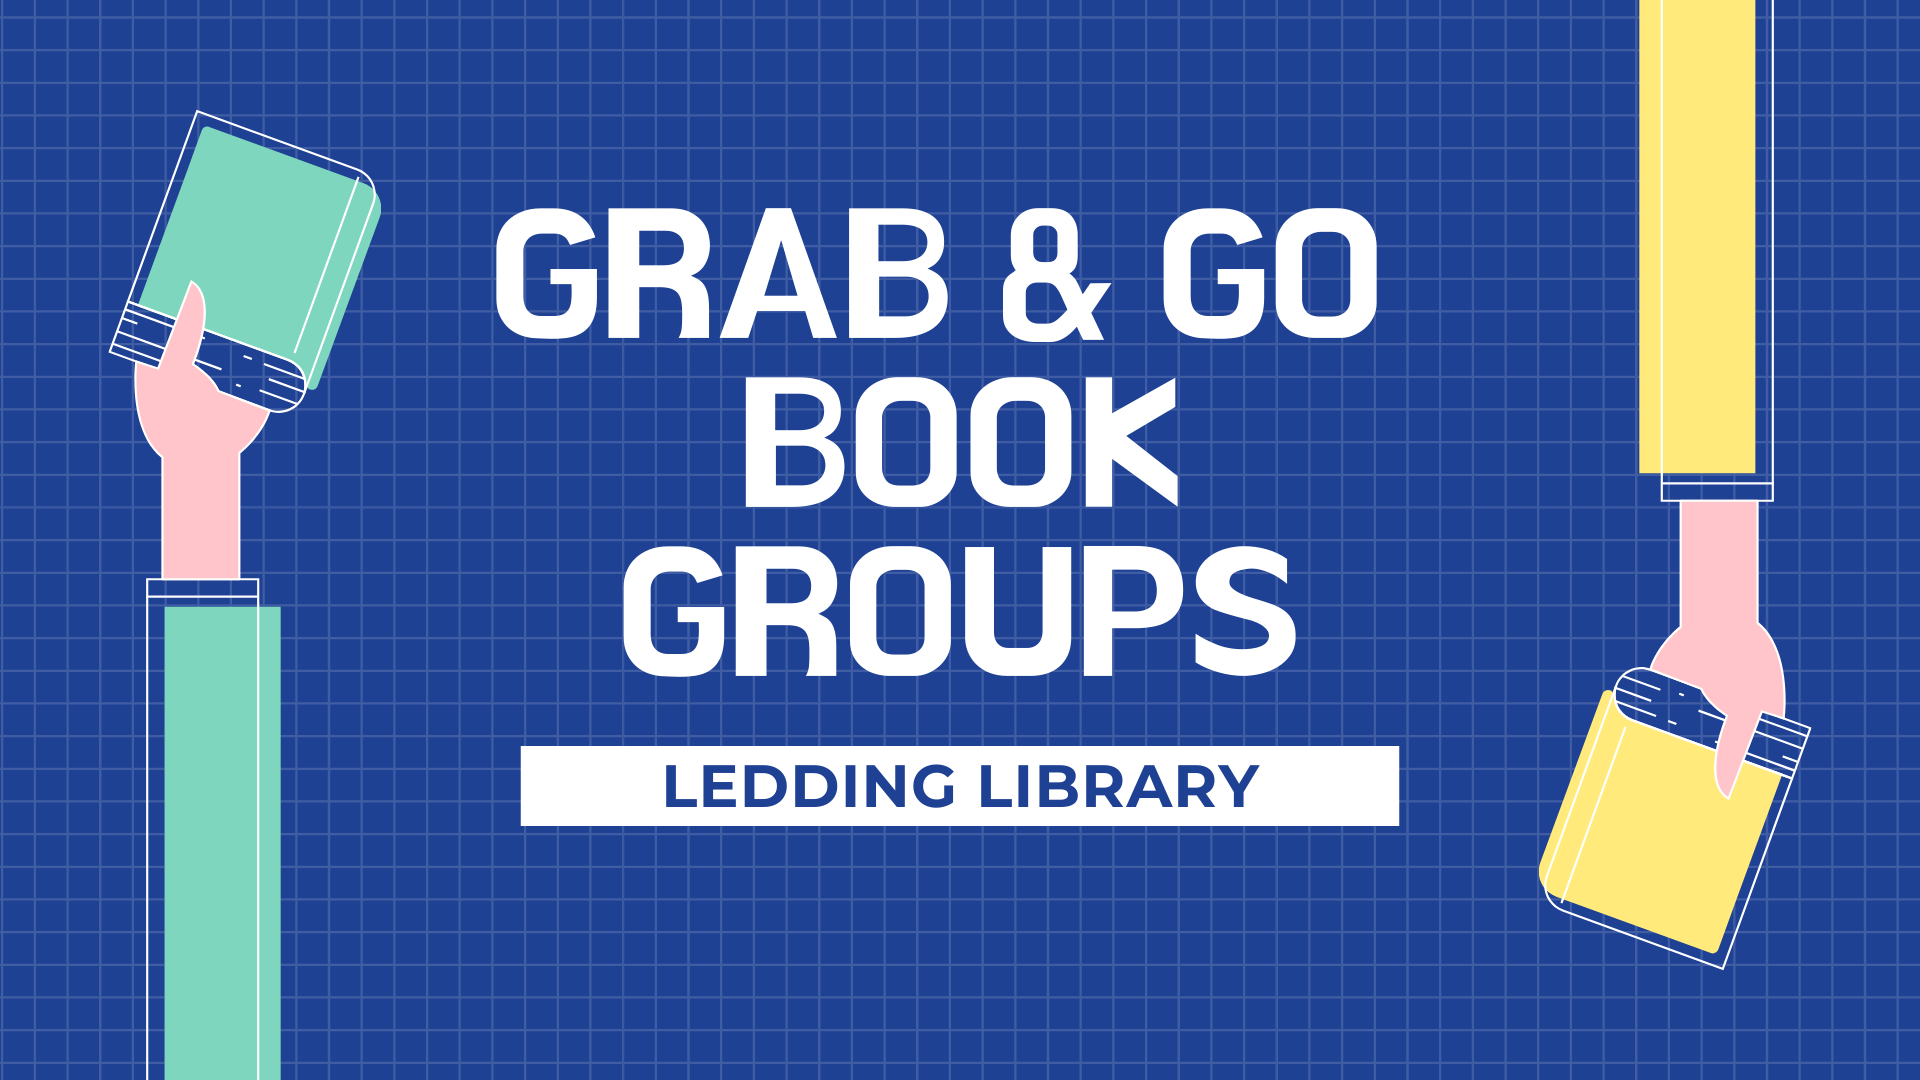 Grab & Go Book Groups. Ledding Library.